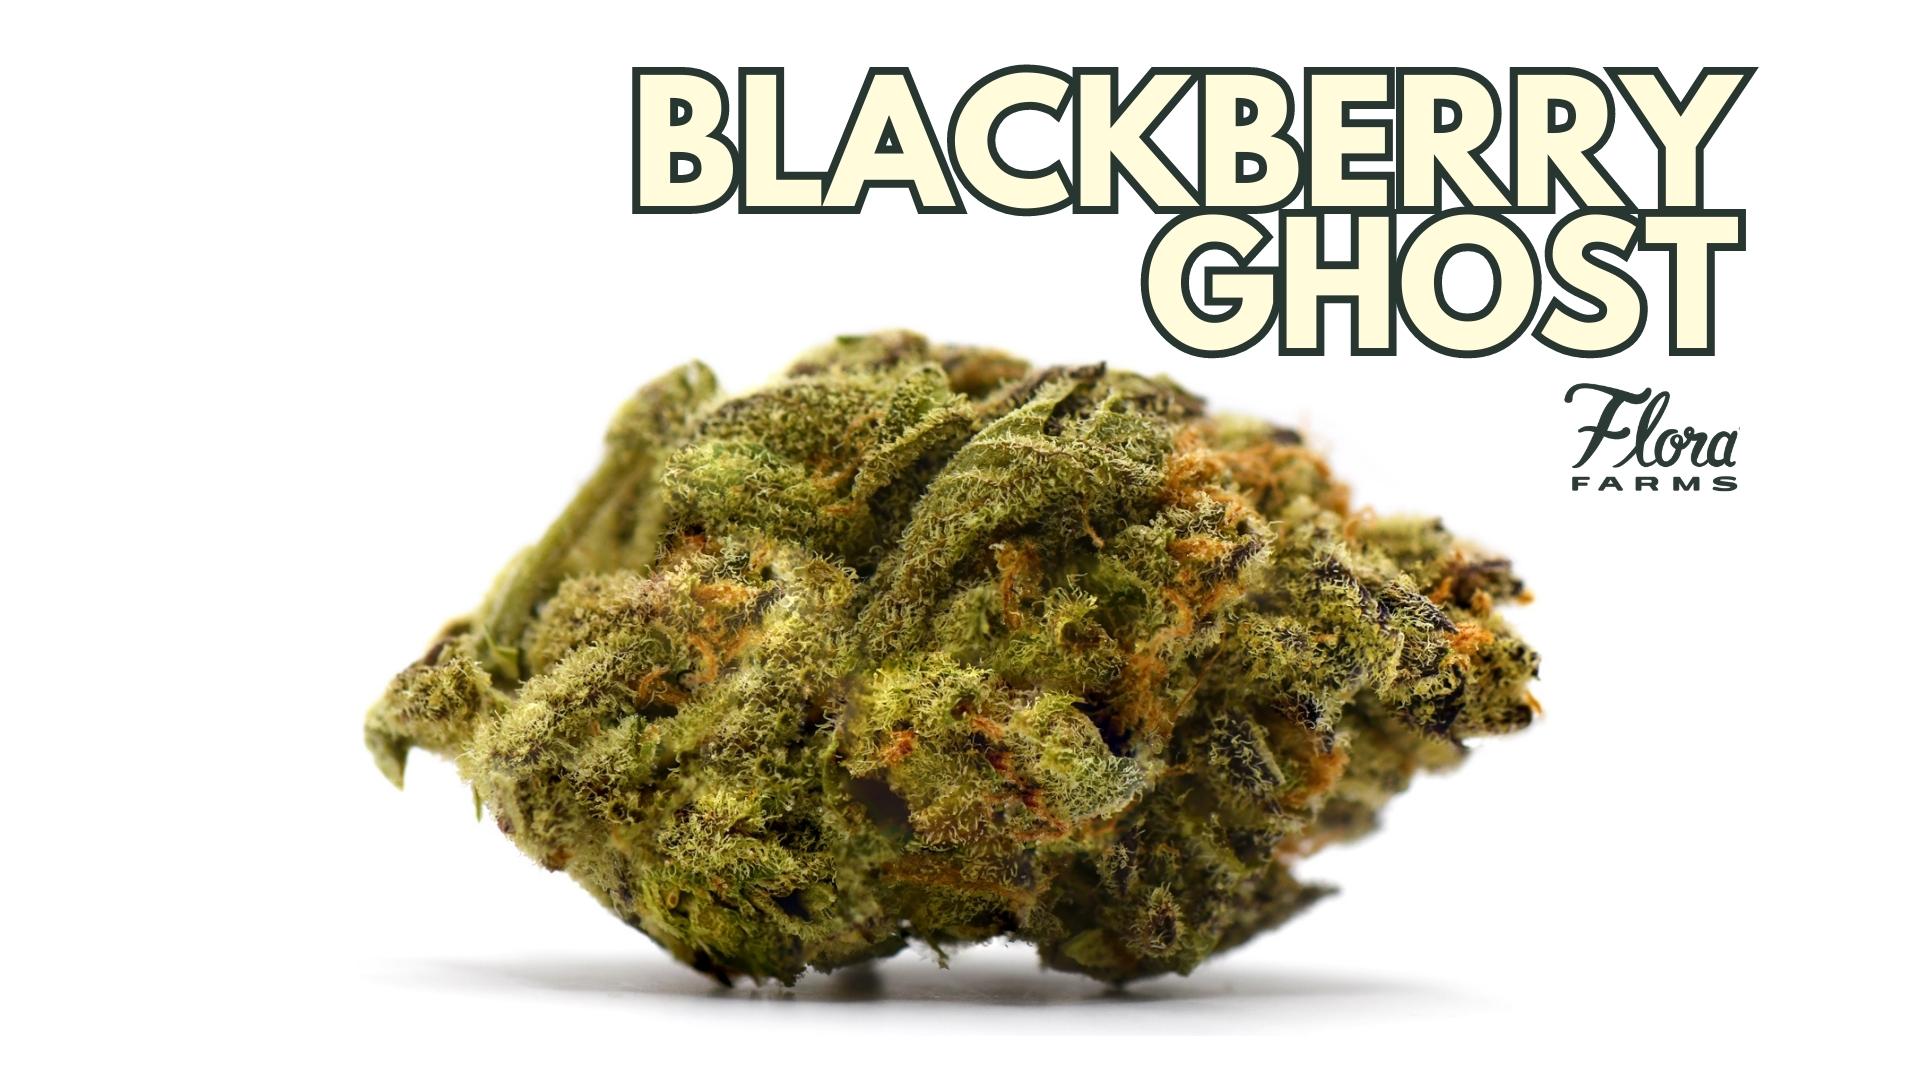 Blackberry Ghost